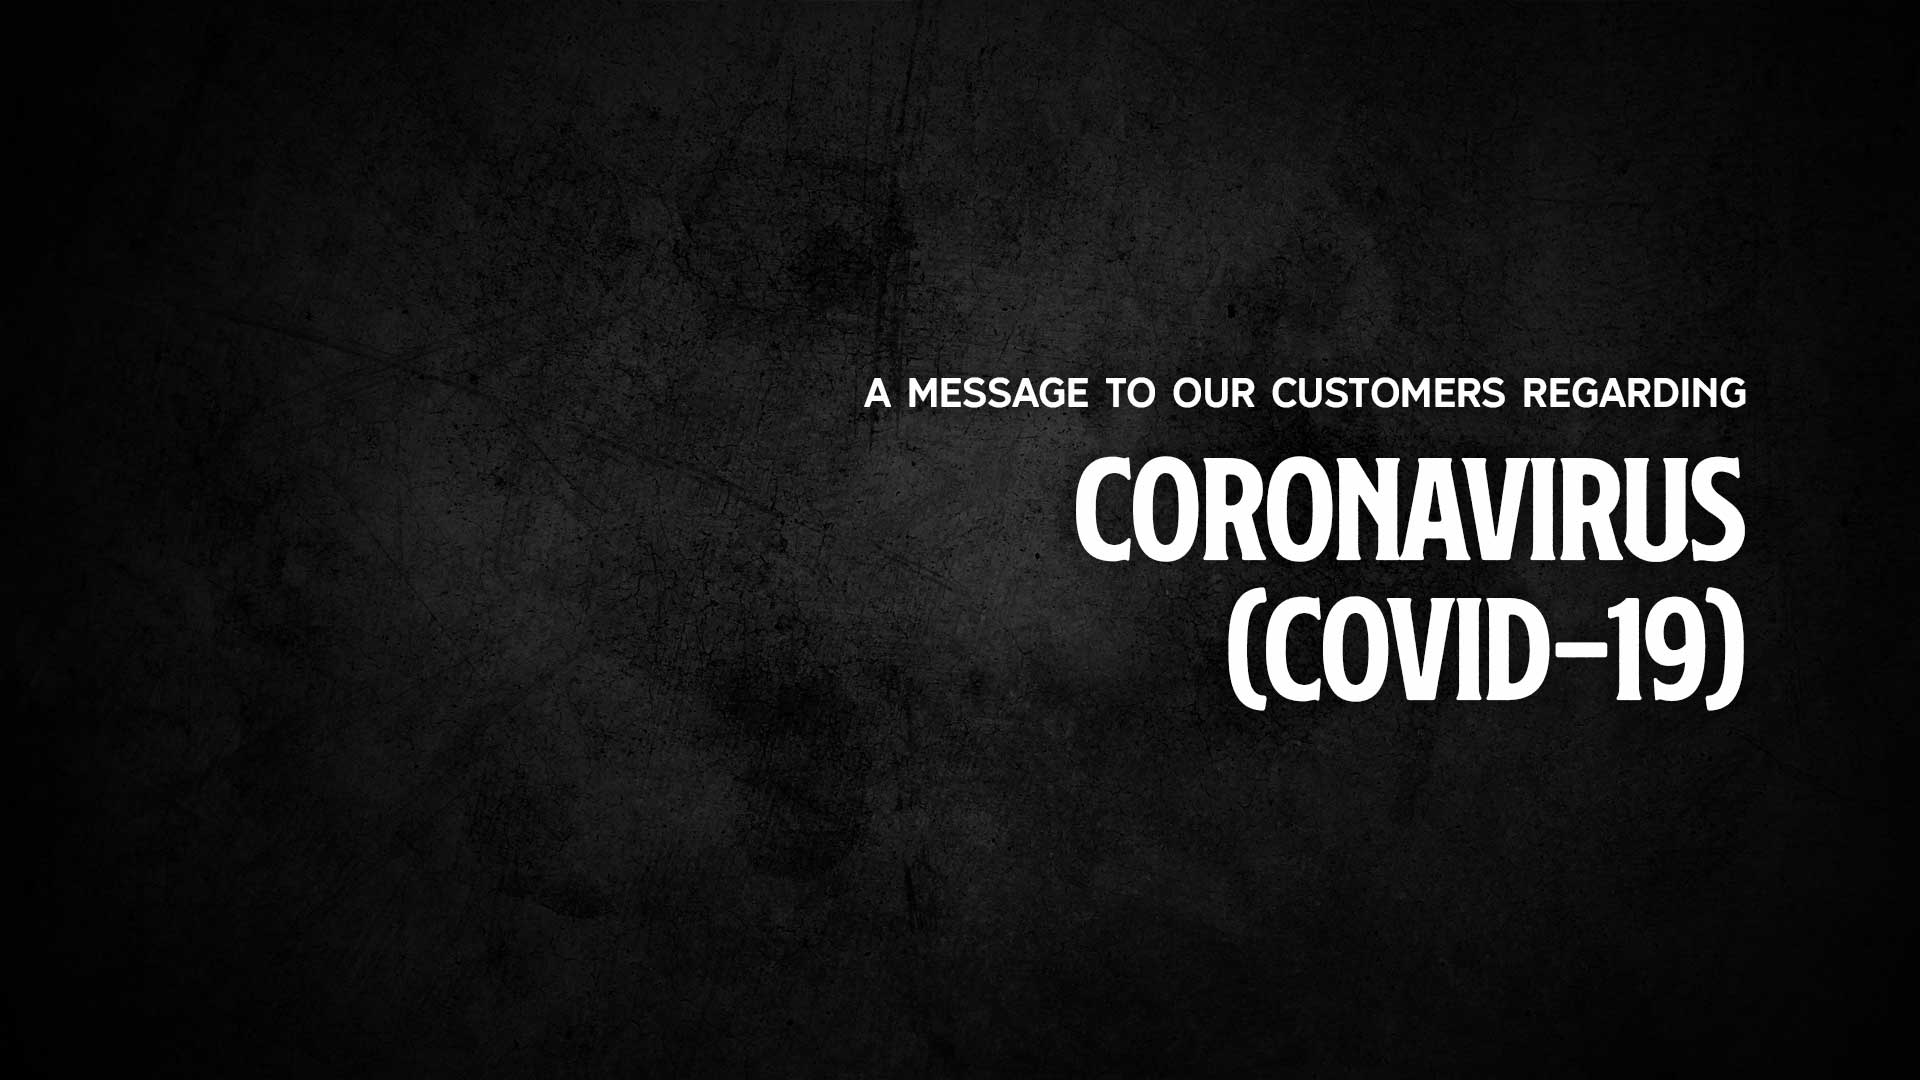 a message to our customers regarding coronavirus